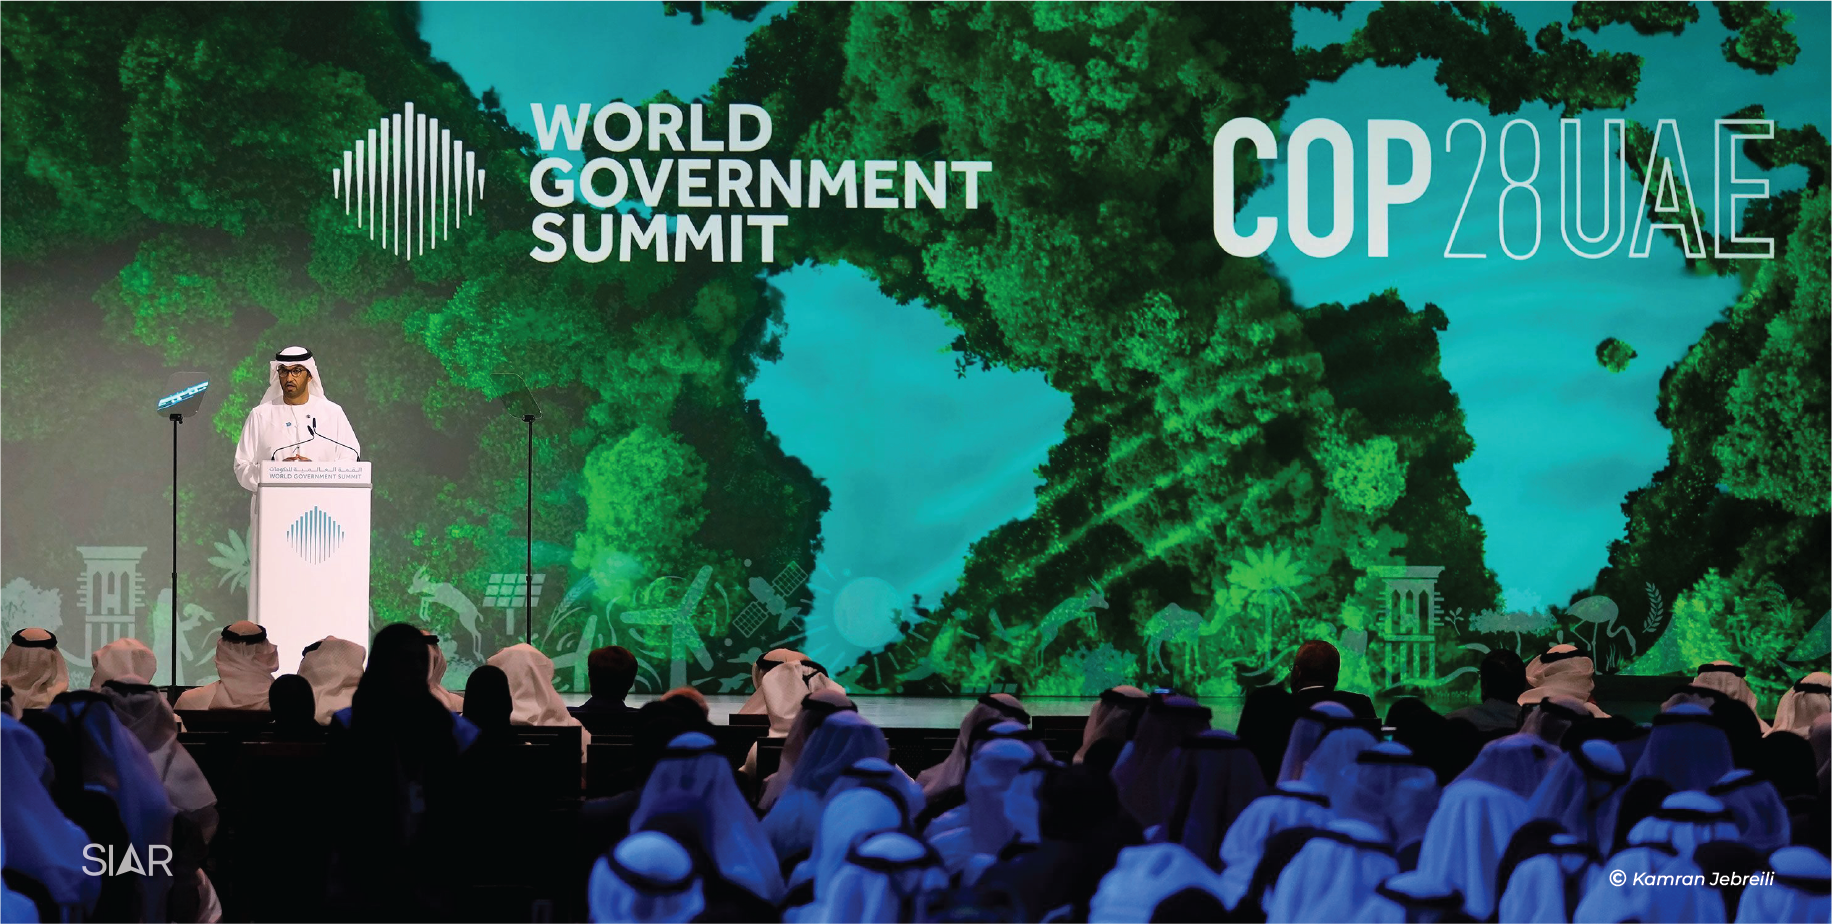 Tagih Menagih Janji di COP 28 Dubai